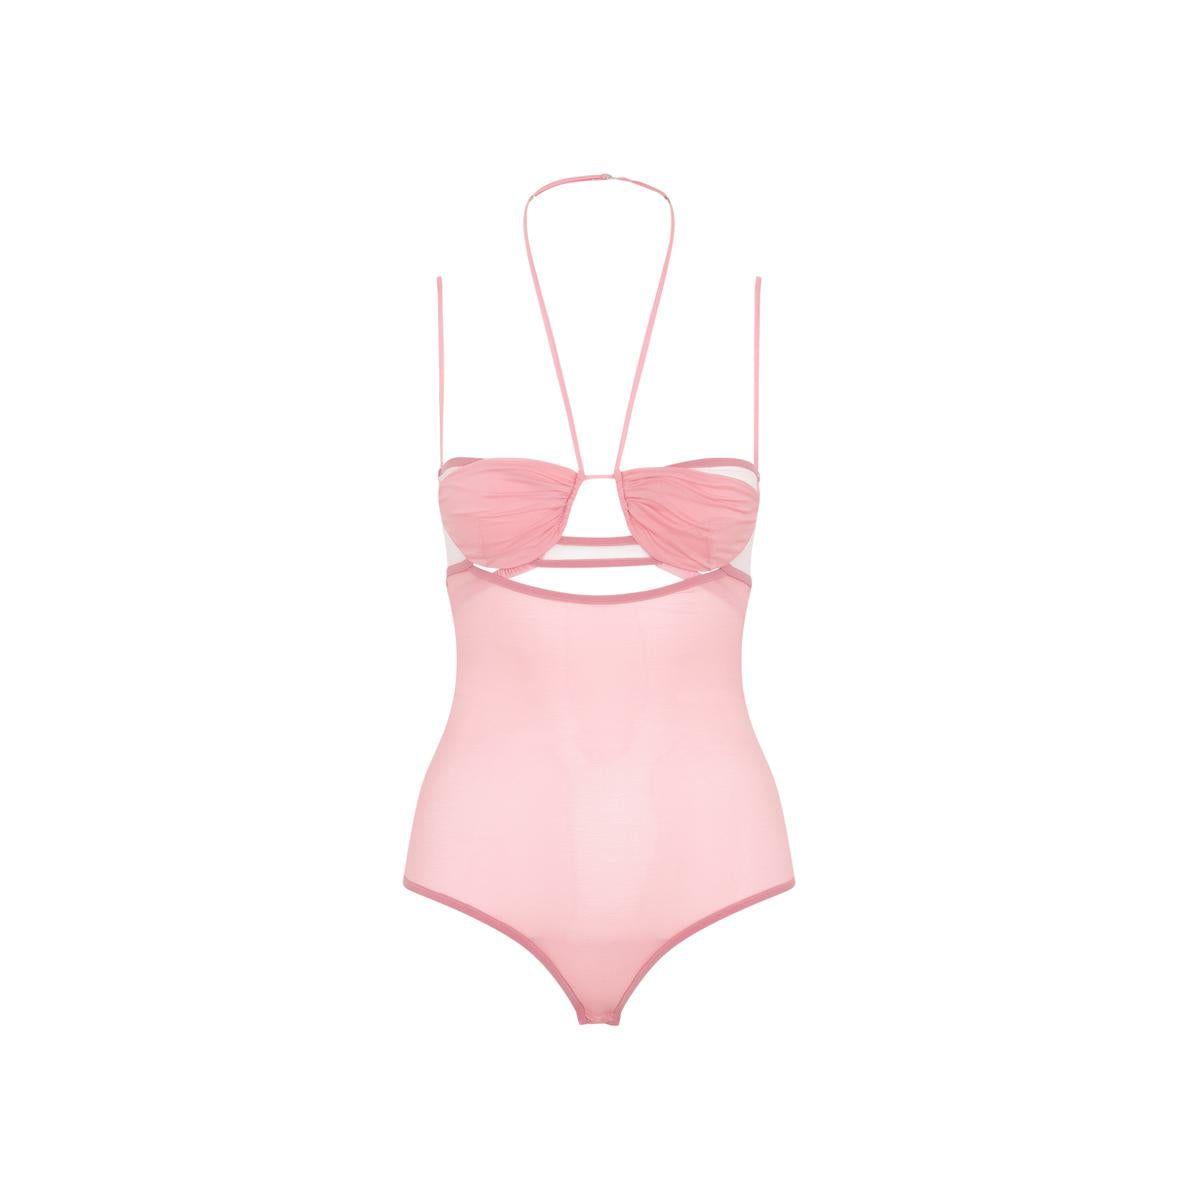 Nensi Dojaka Draped Double Bra Bodysuit Top in Pink | Lyst